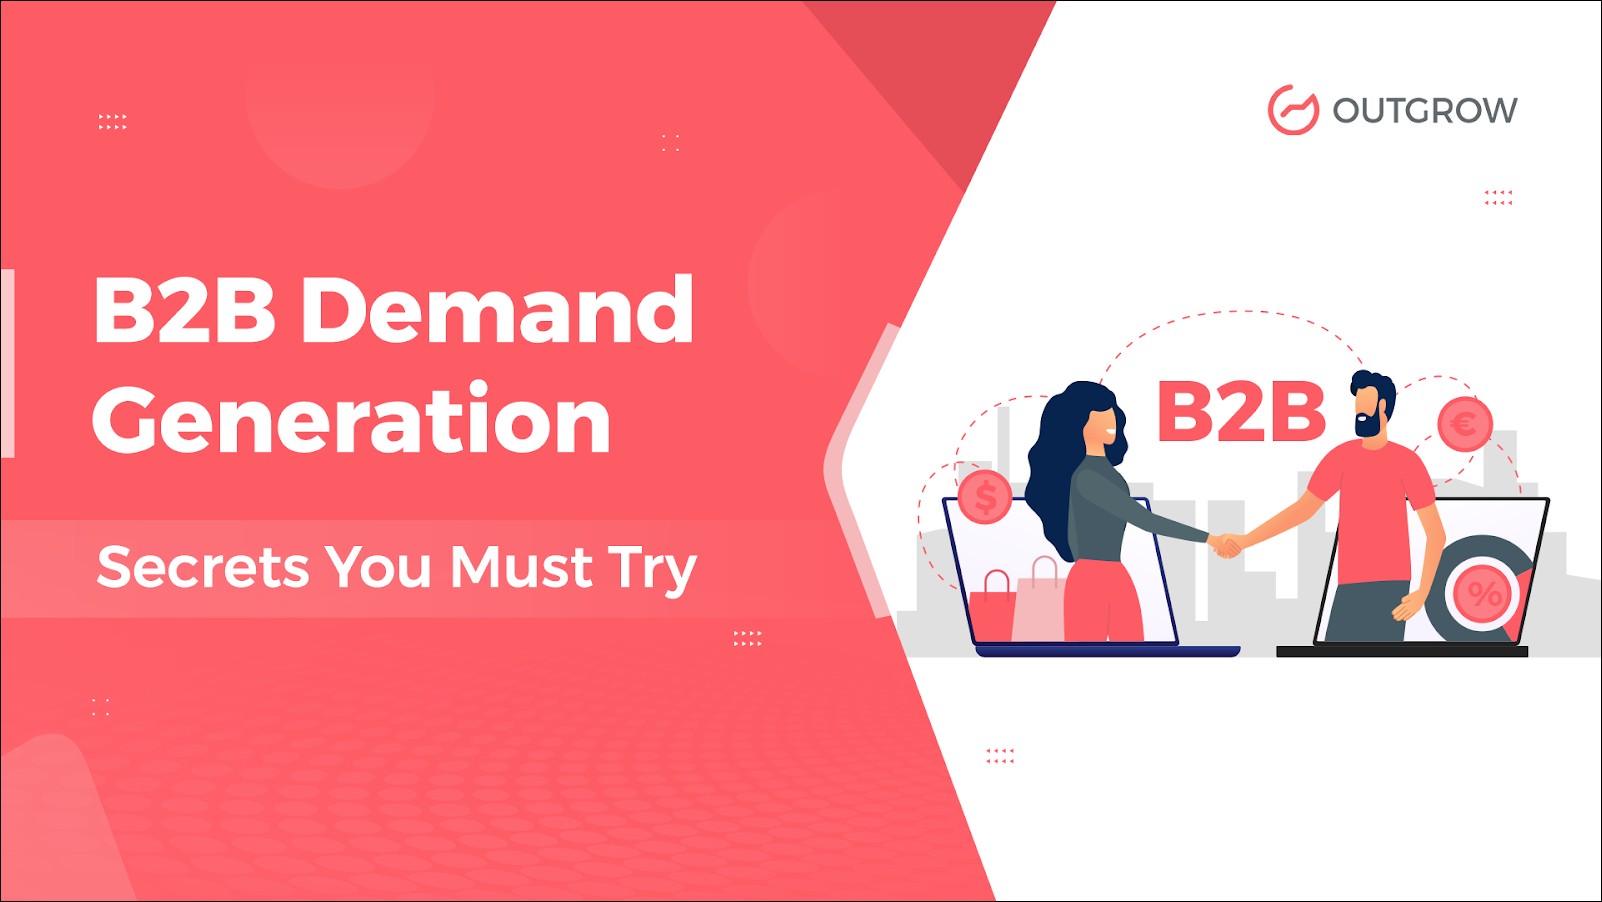 B2B demand generation